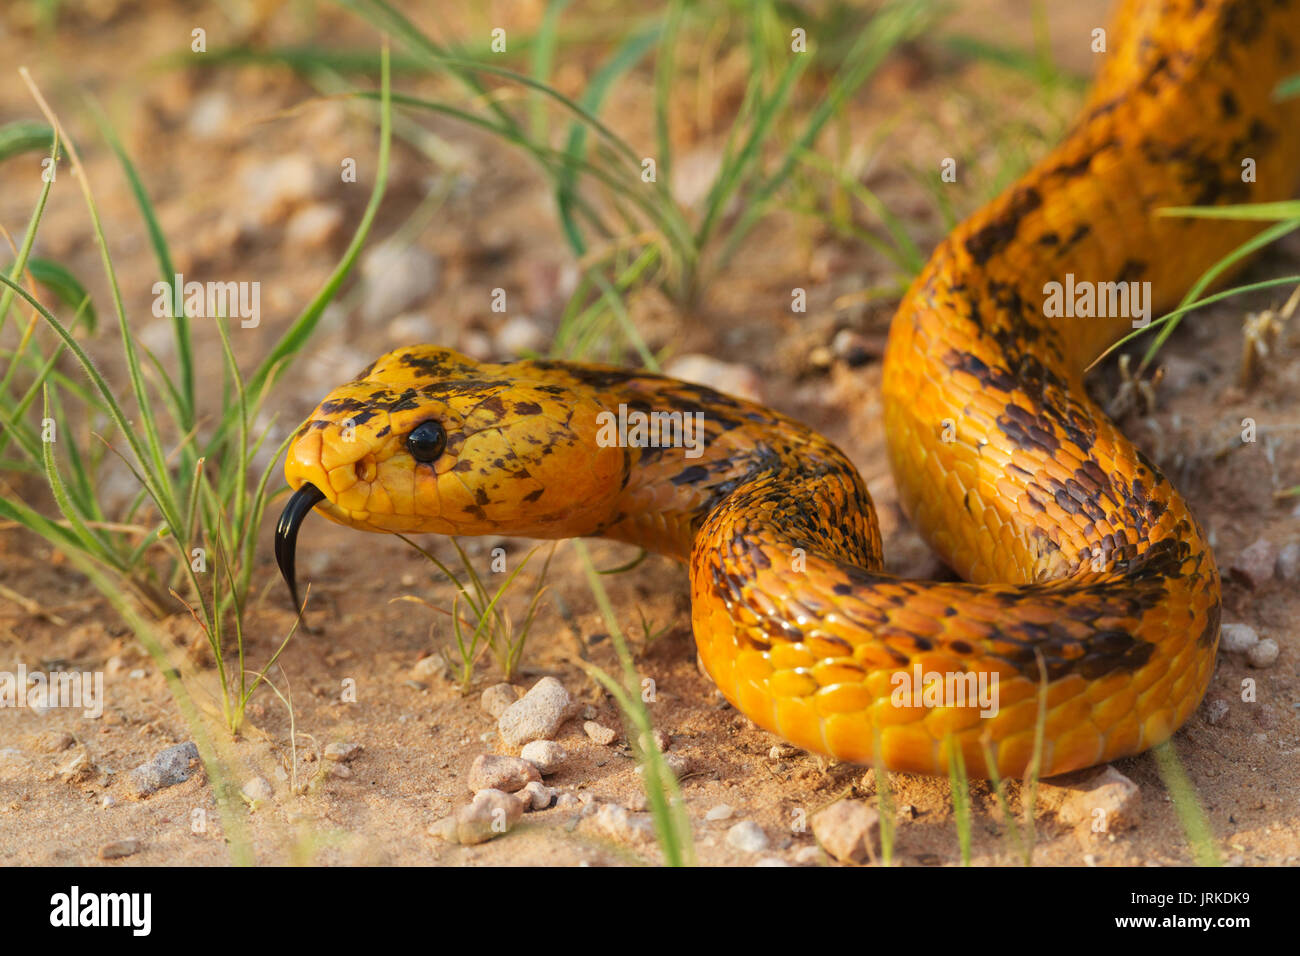 Cape Cobra (Naja nivea), sticking out tongue, during the rainy season in green grass, Kalahari Desert Stock Photo